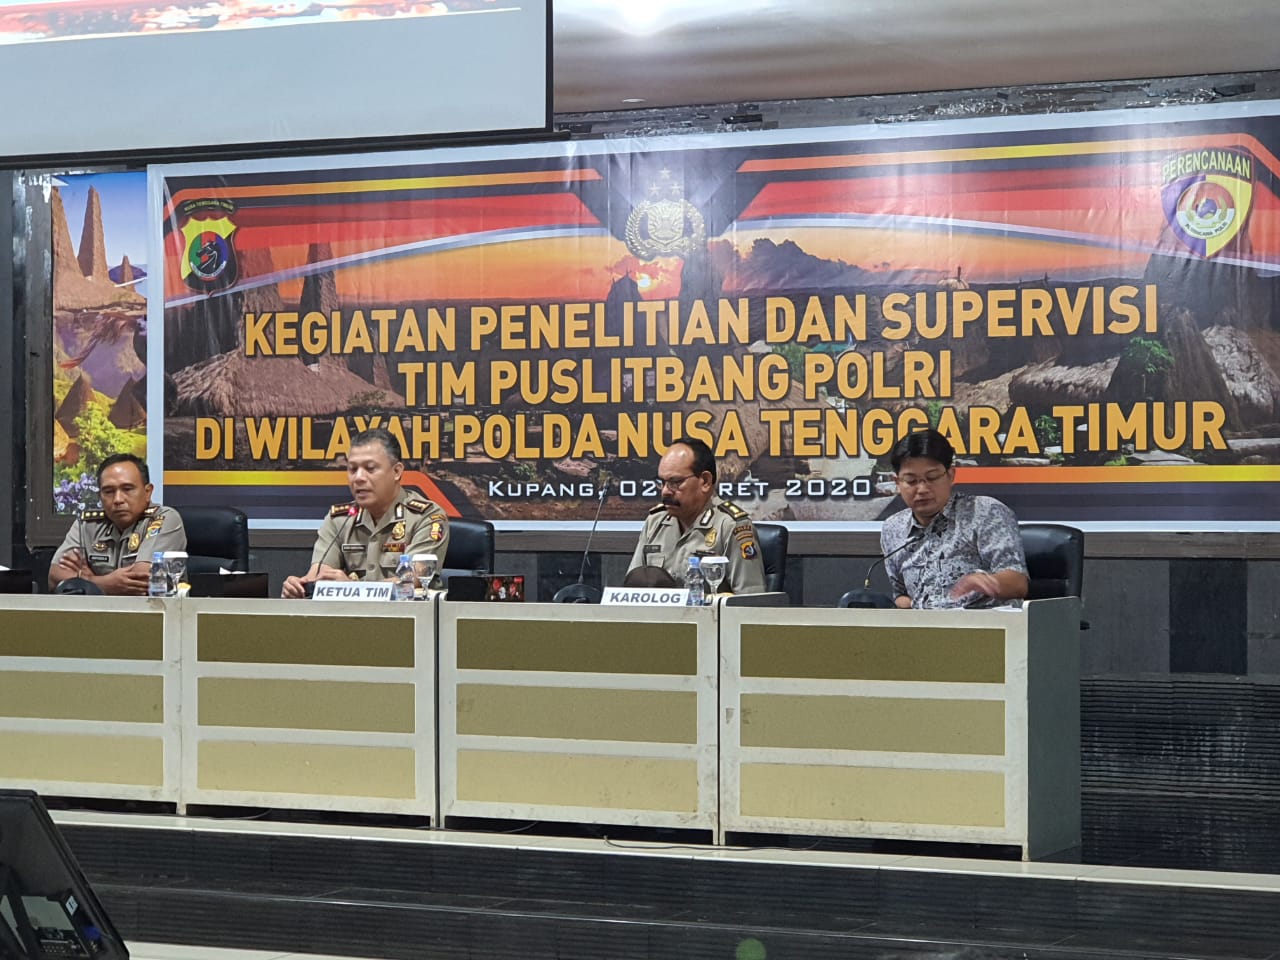 Biro Rena Polda Polda NTT Gelar Kegiatan Penelitian dan Supervisi Tim Puslitbang Polri